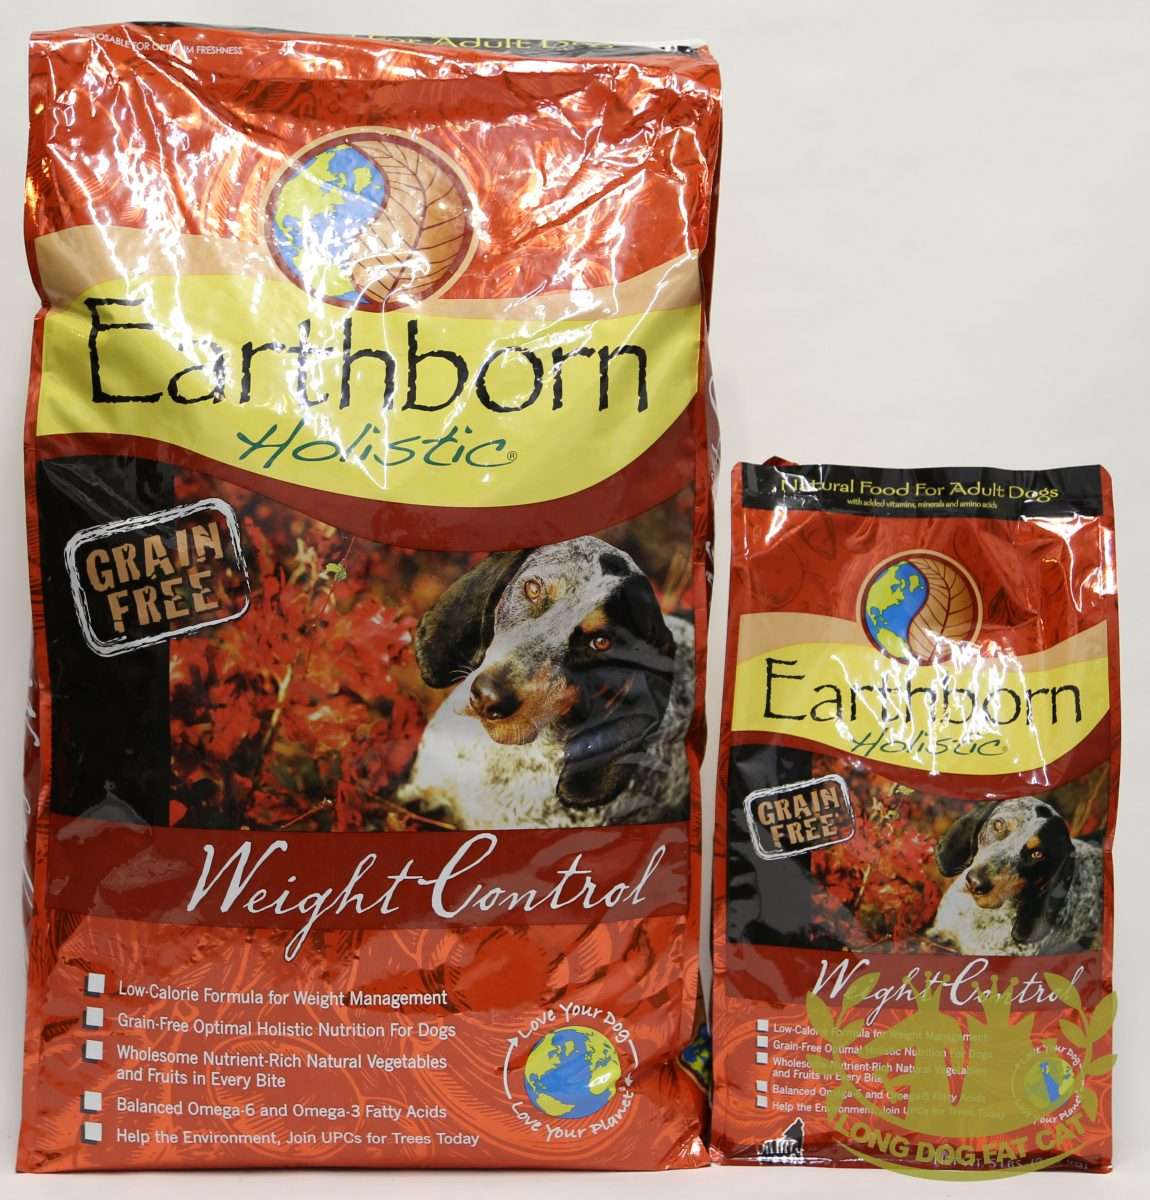 Earthborn Holistic Grain Free Weight Control Dog Food